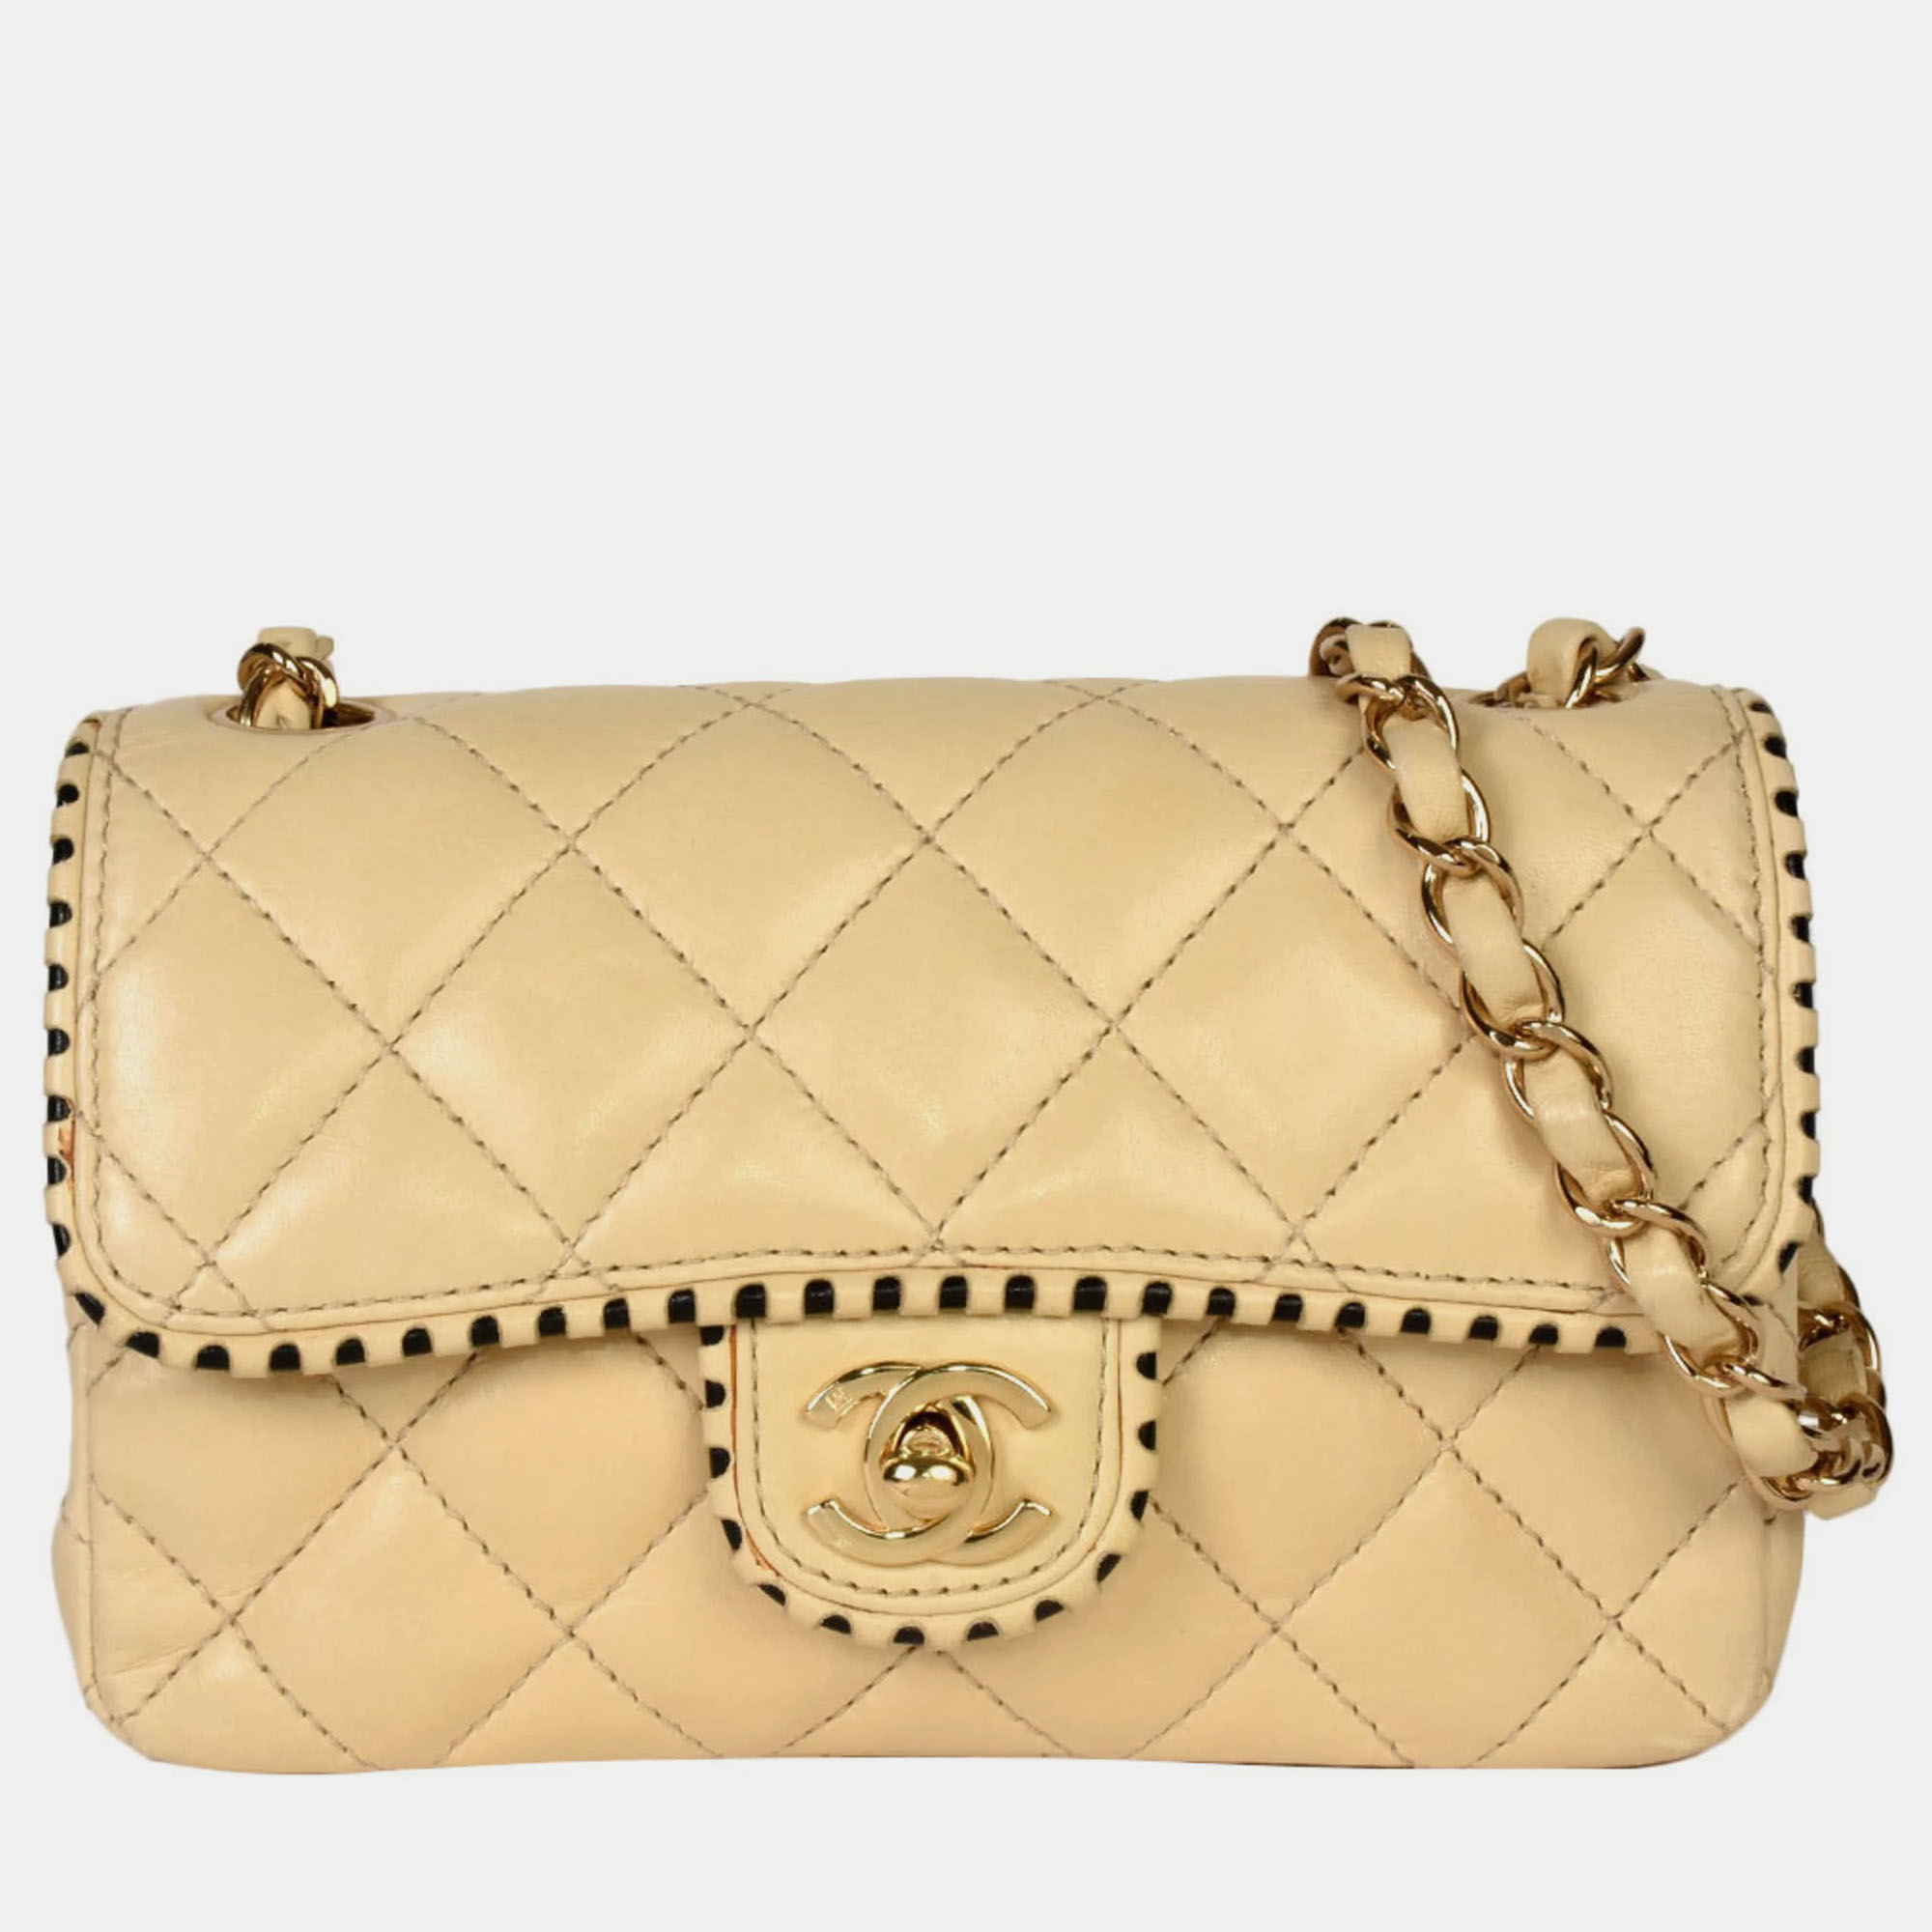 Chanel vintage classic mini square flap bag